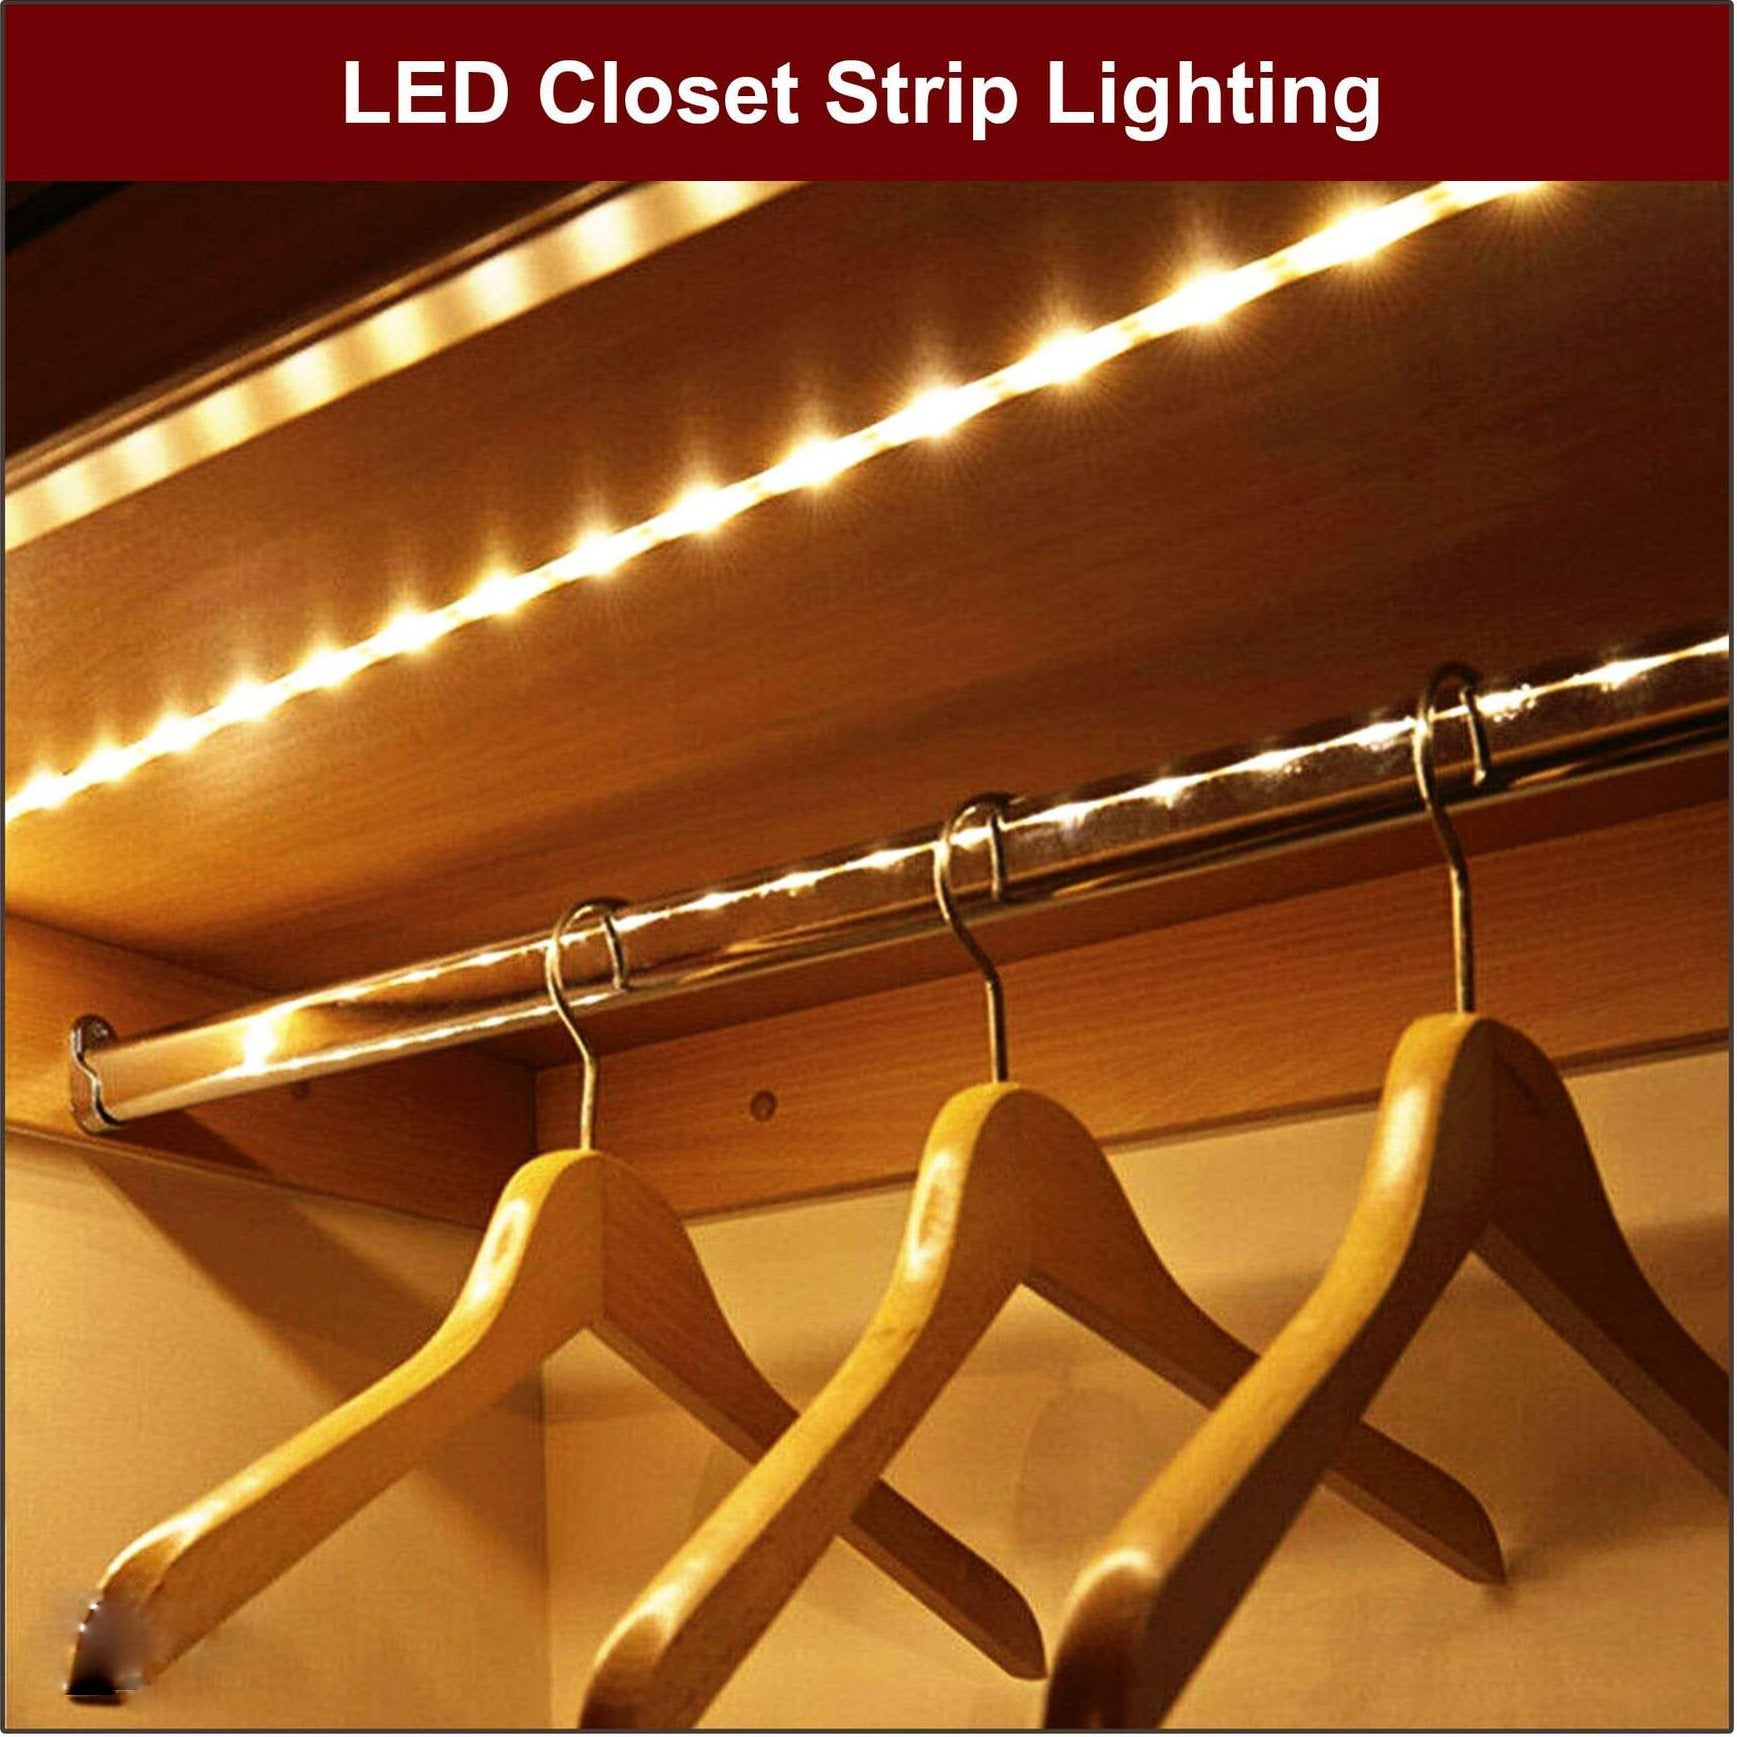 😍 LAST DAY PROMOTION-30%OFF 😍— LED Closet Strip Lighting